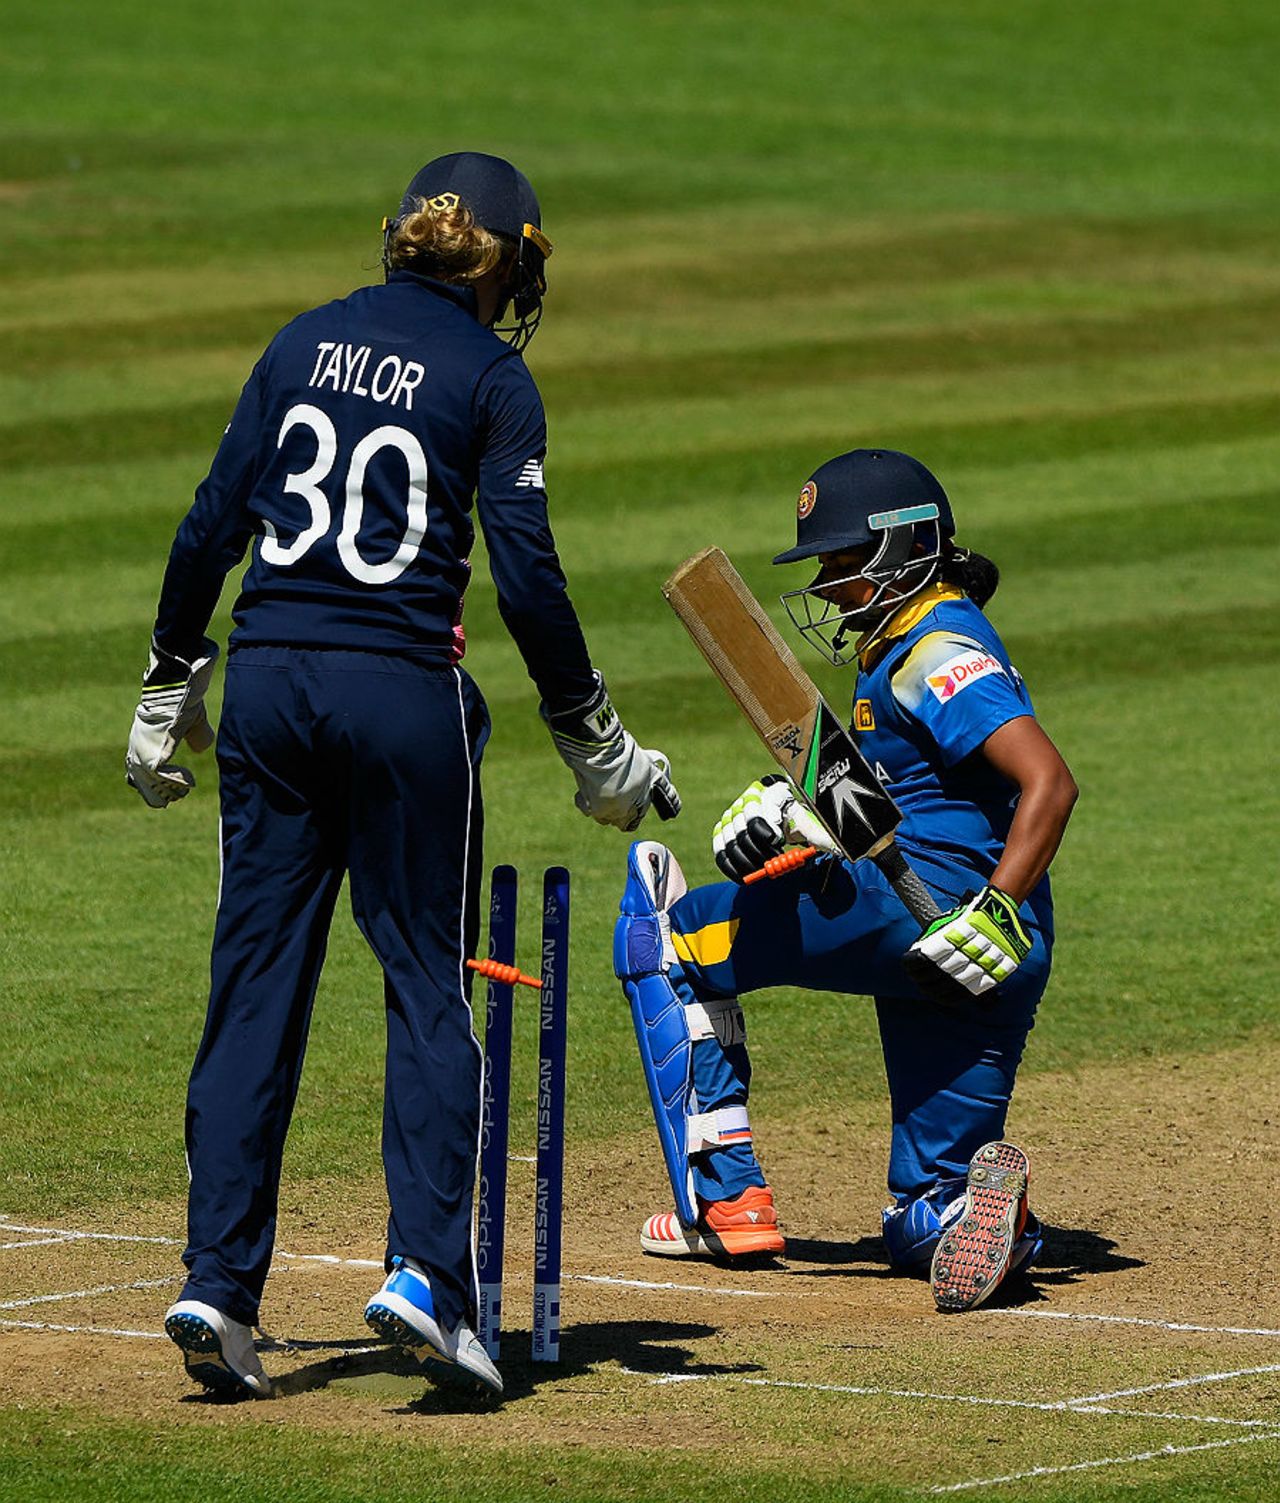 Shashikala Siriwardene was bowled for 33 by Laura Marsh, England v Sri Lanka, Women's World Cup, Taunton, July 2, 2017